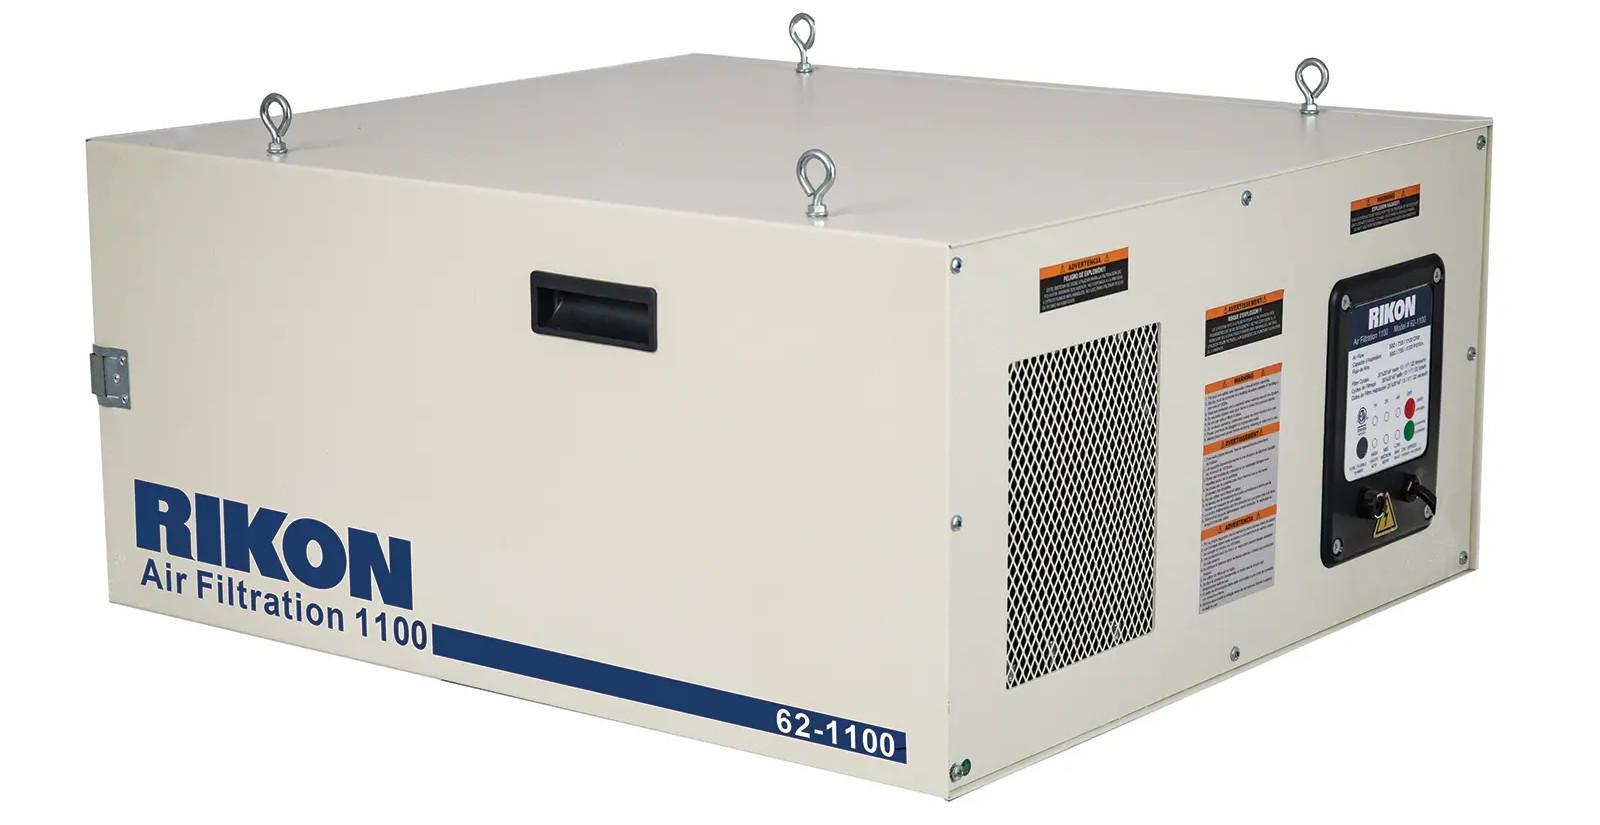 Model 62-1100 Air Filtration System